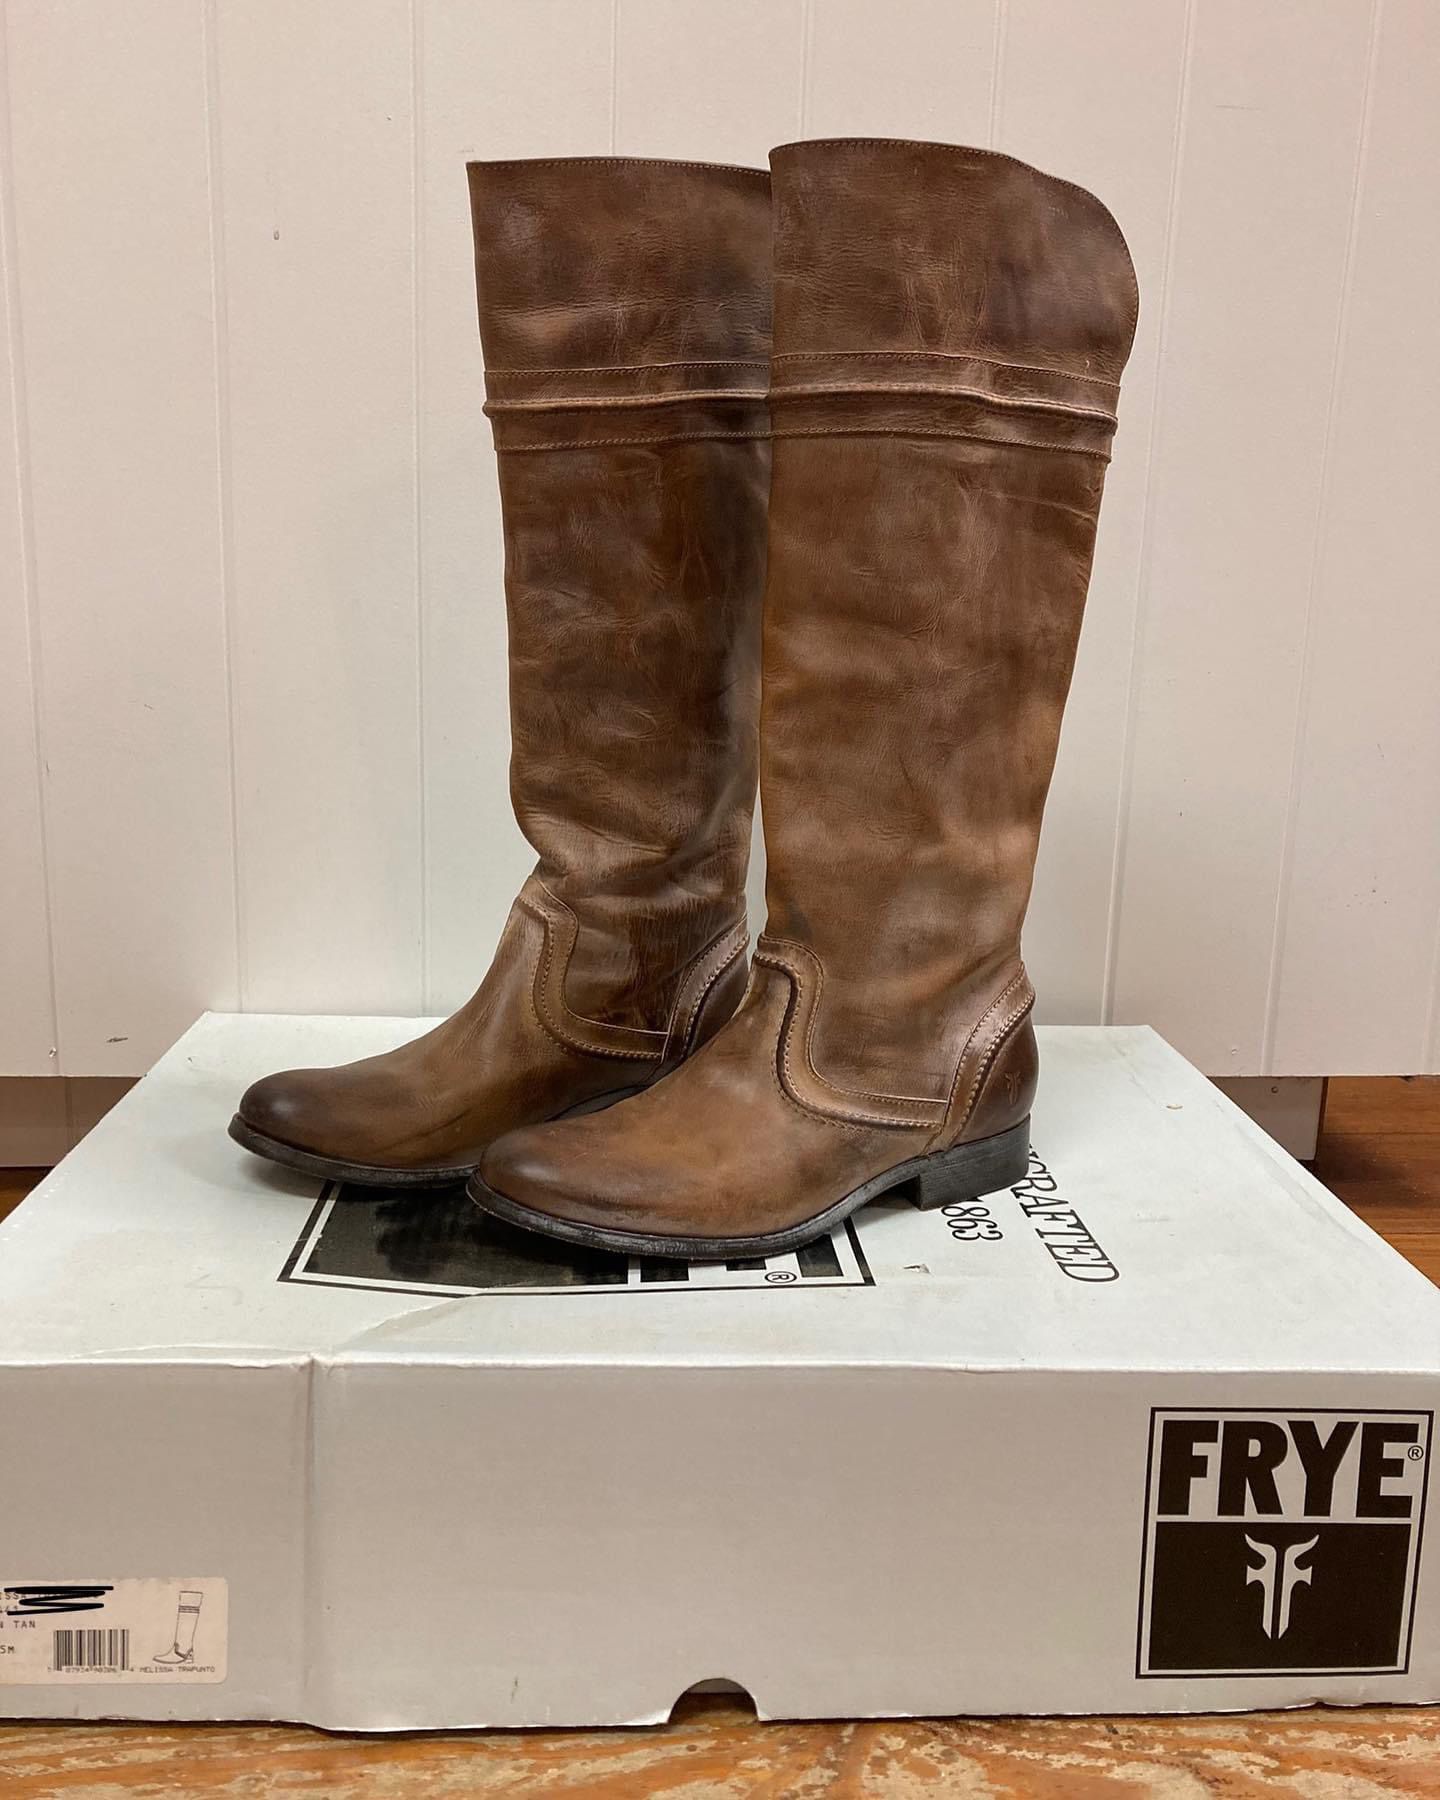 Frye boots $100